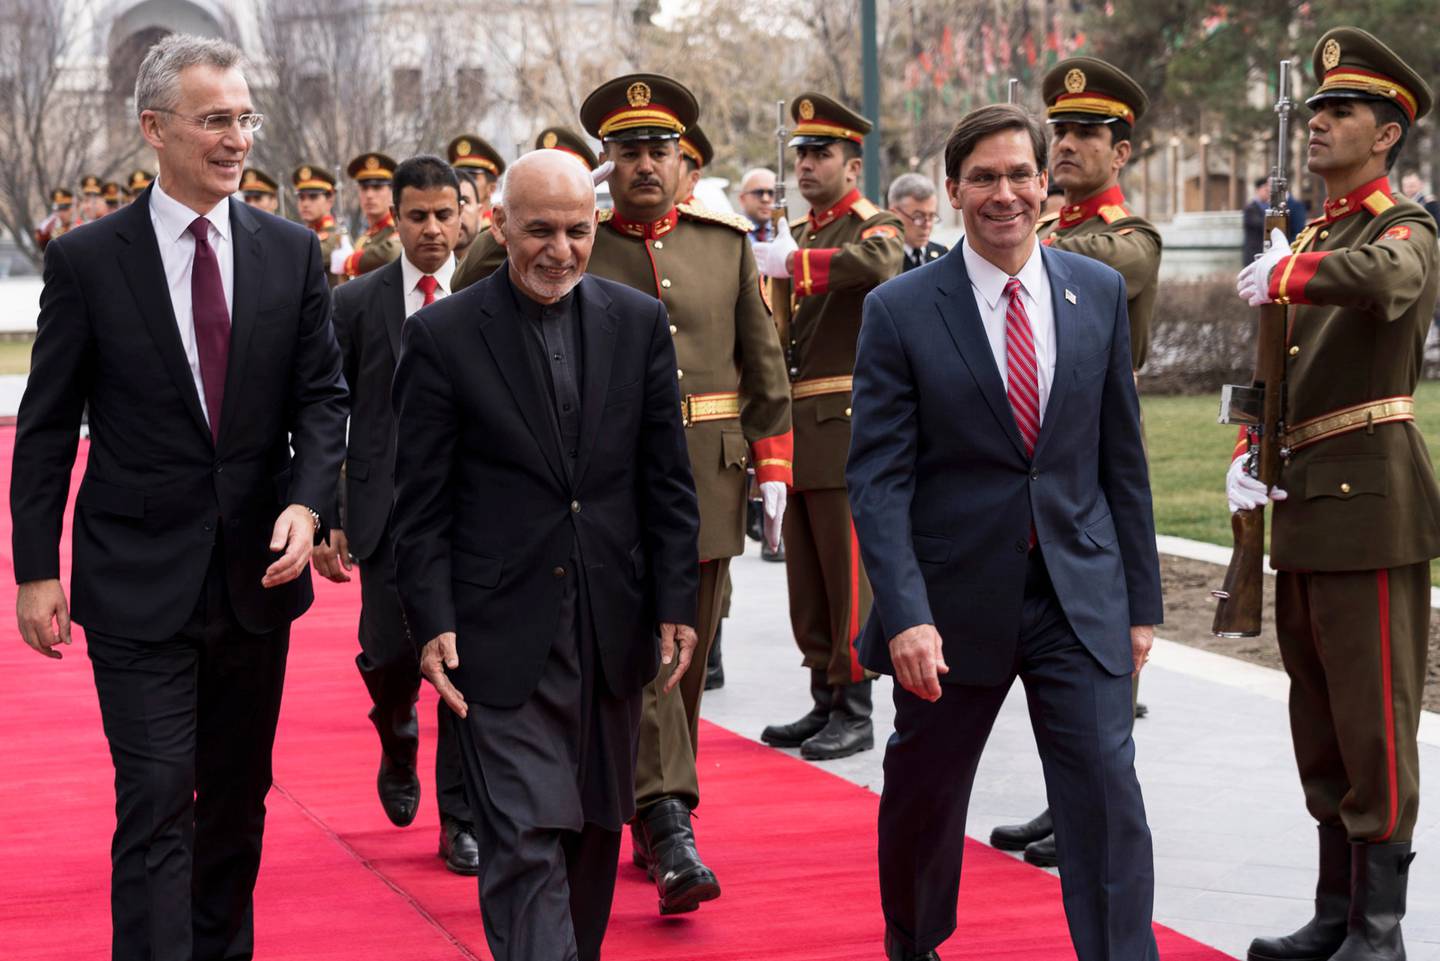 NATO Secretary General Jens Stoltenberg, Afghanistan President Ashraf Ghani and U.S. Secretary of Defense Mark Esper